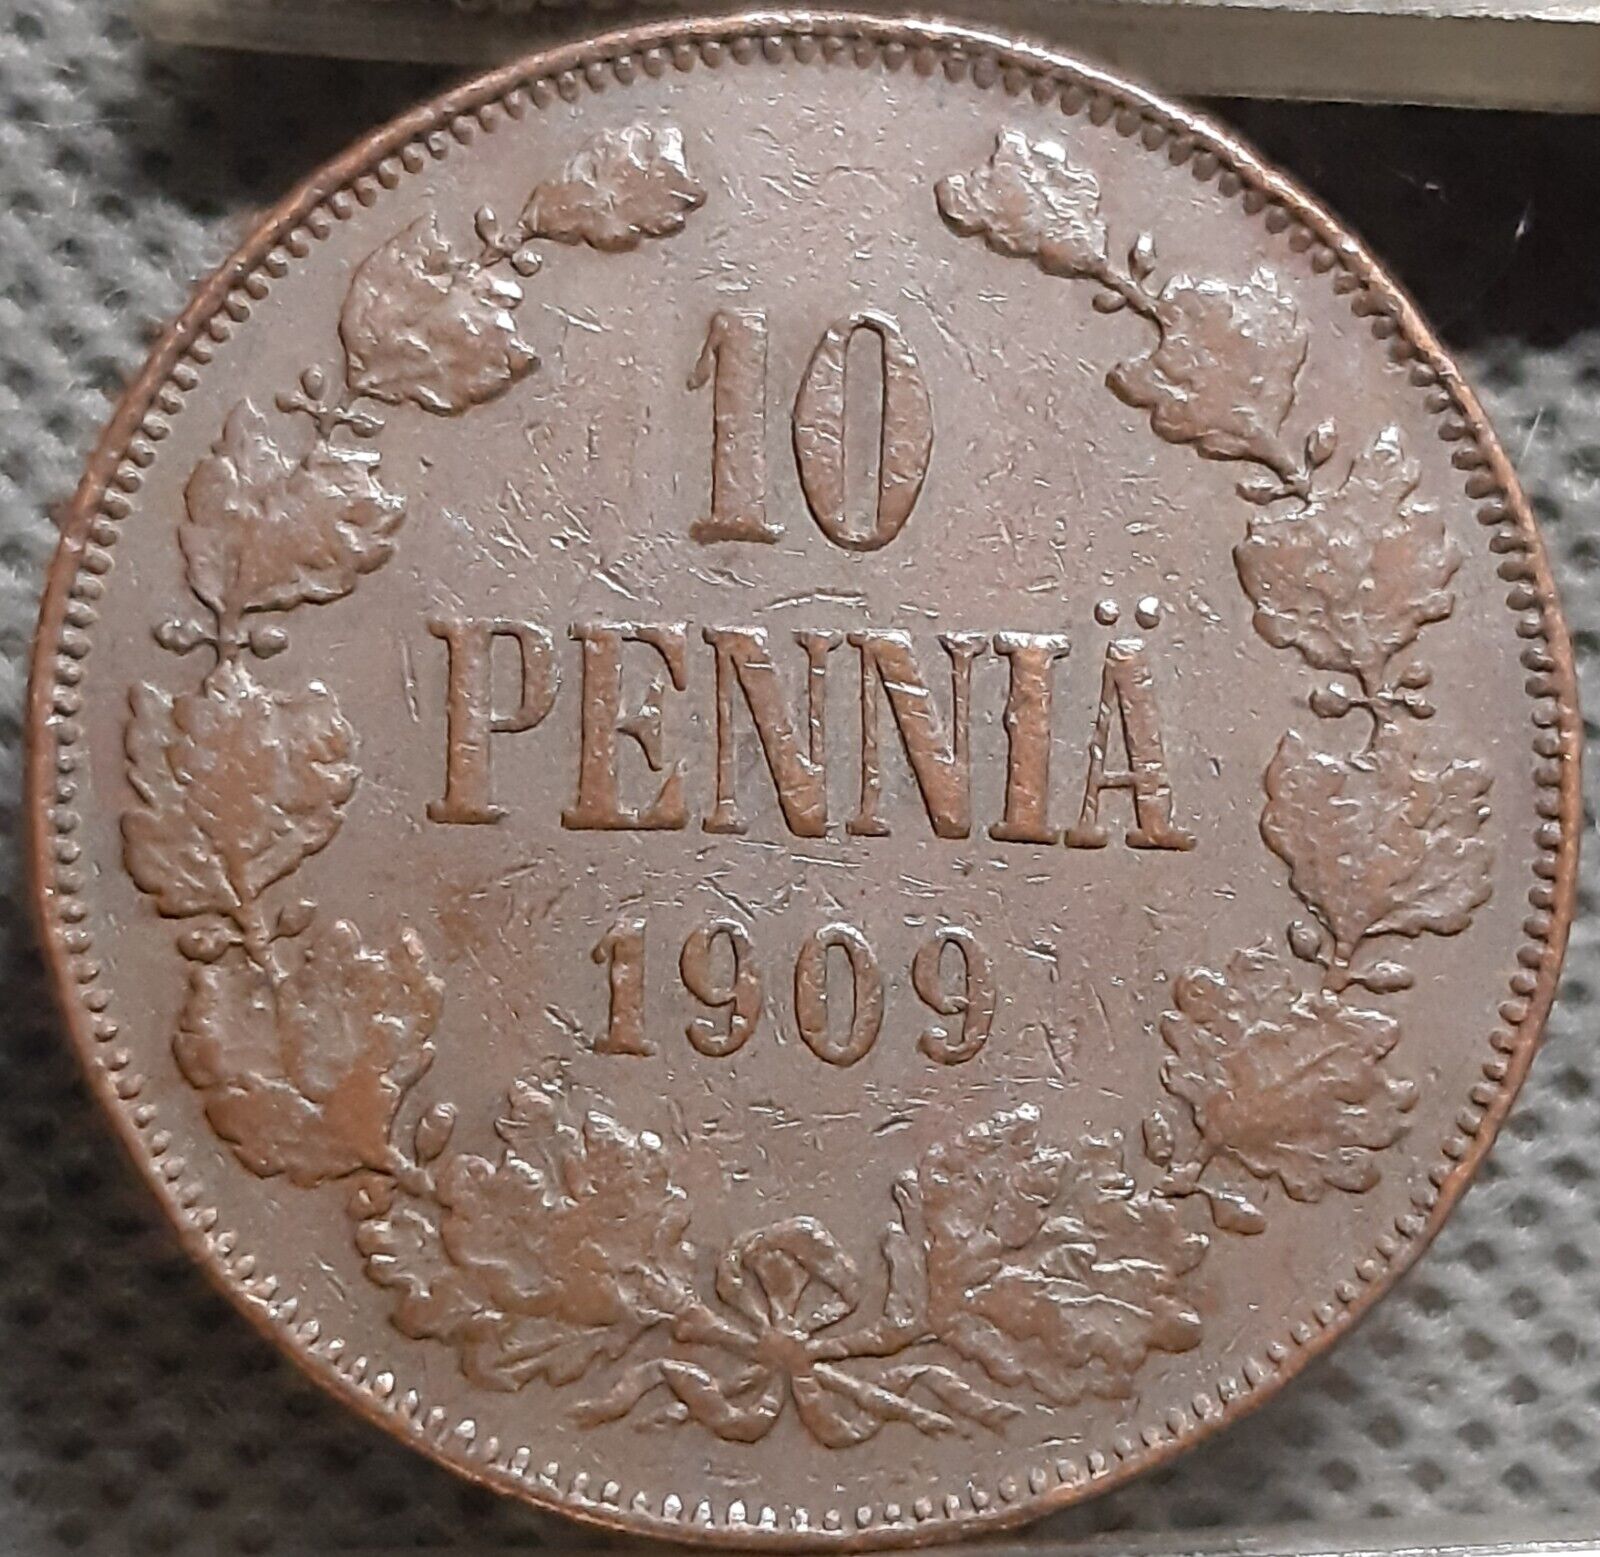 Finland 10 Penniä 1909 Km#14 Copper Emperor Nicholas Ii (1974)